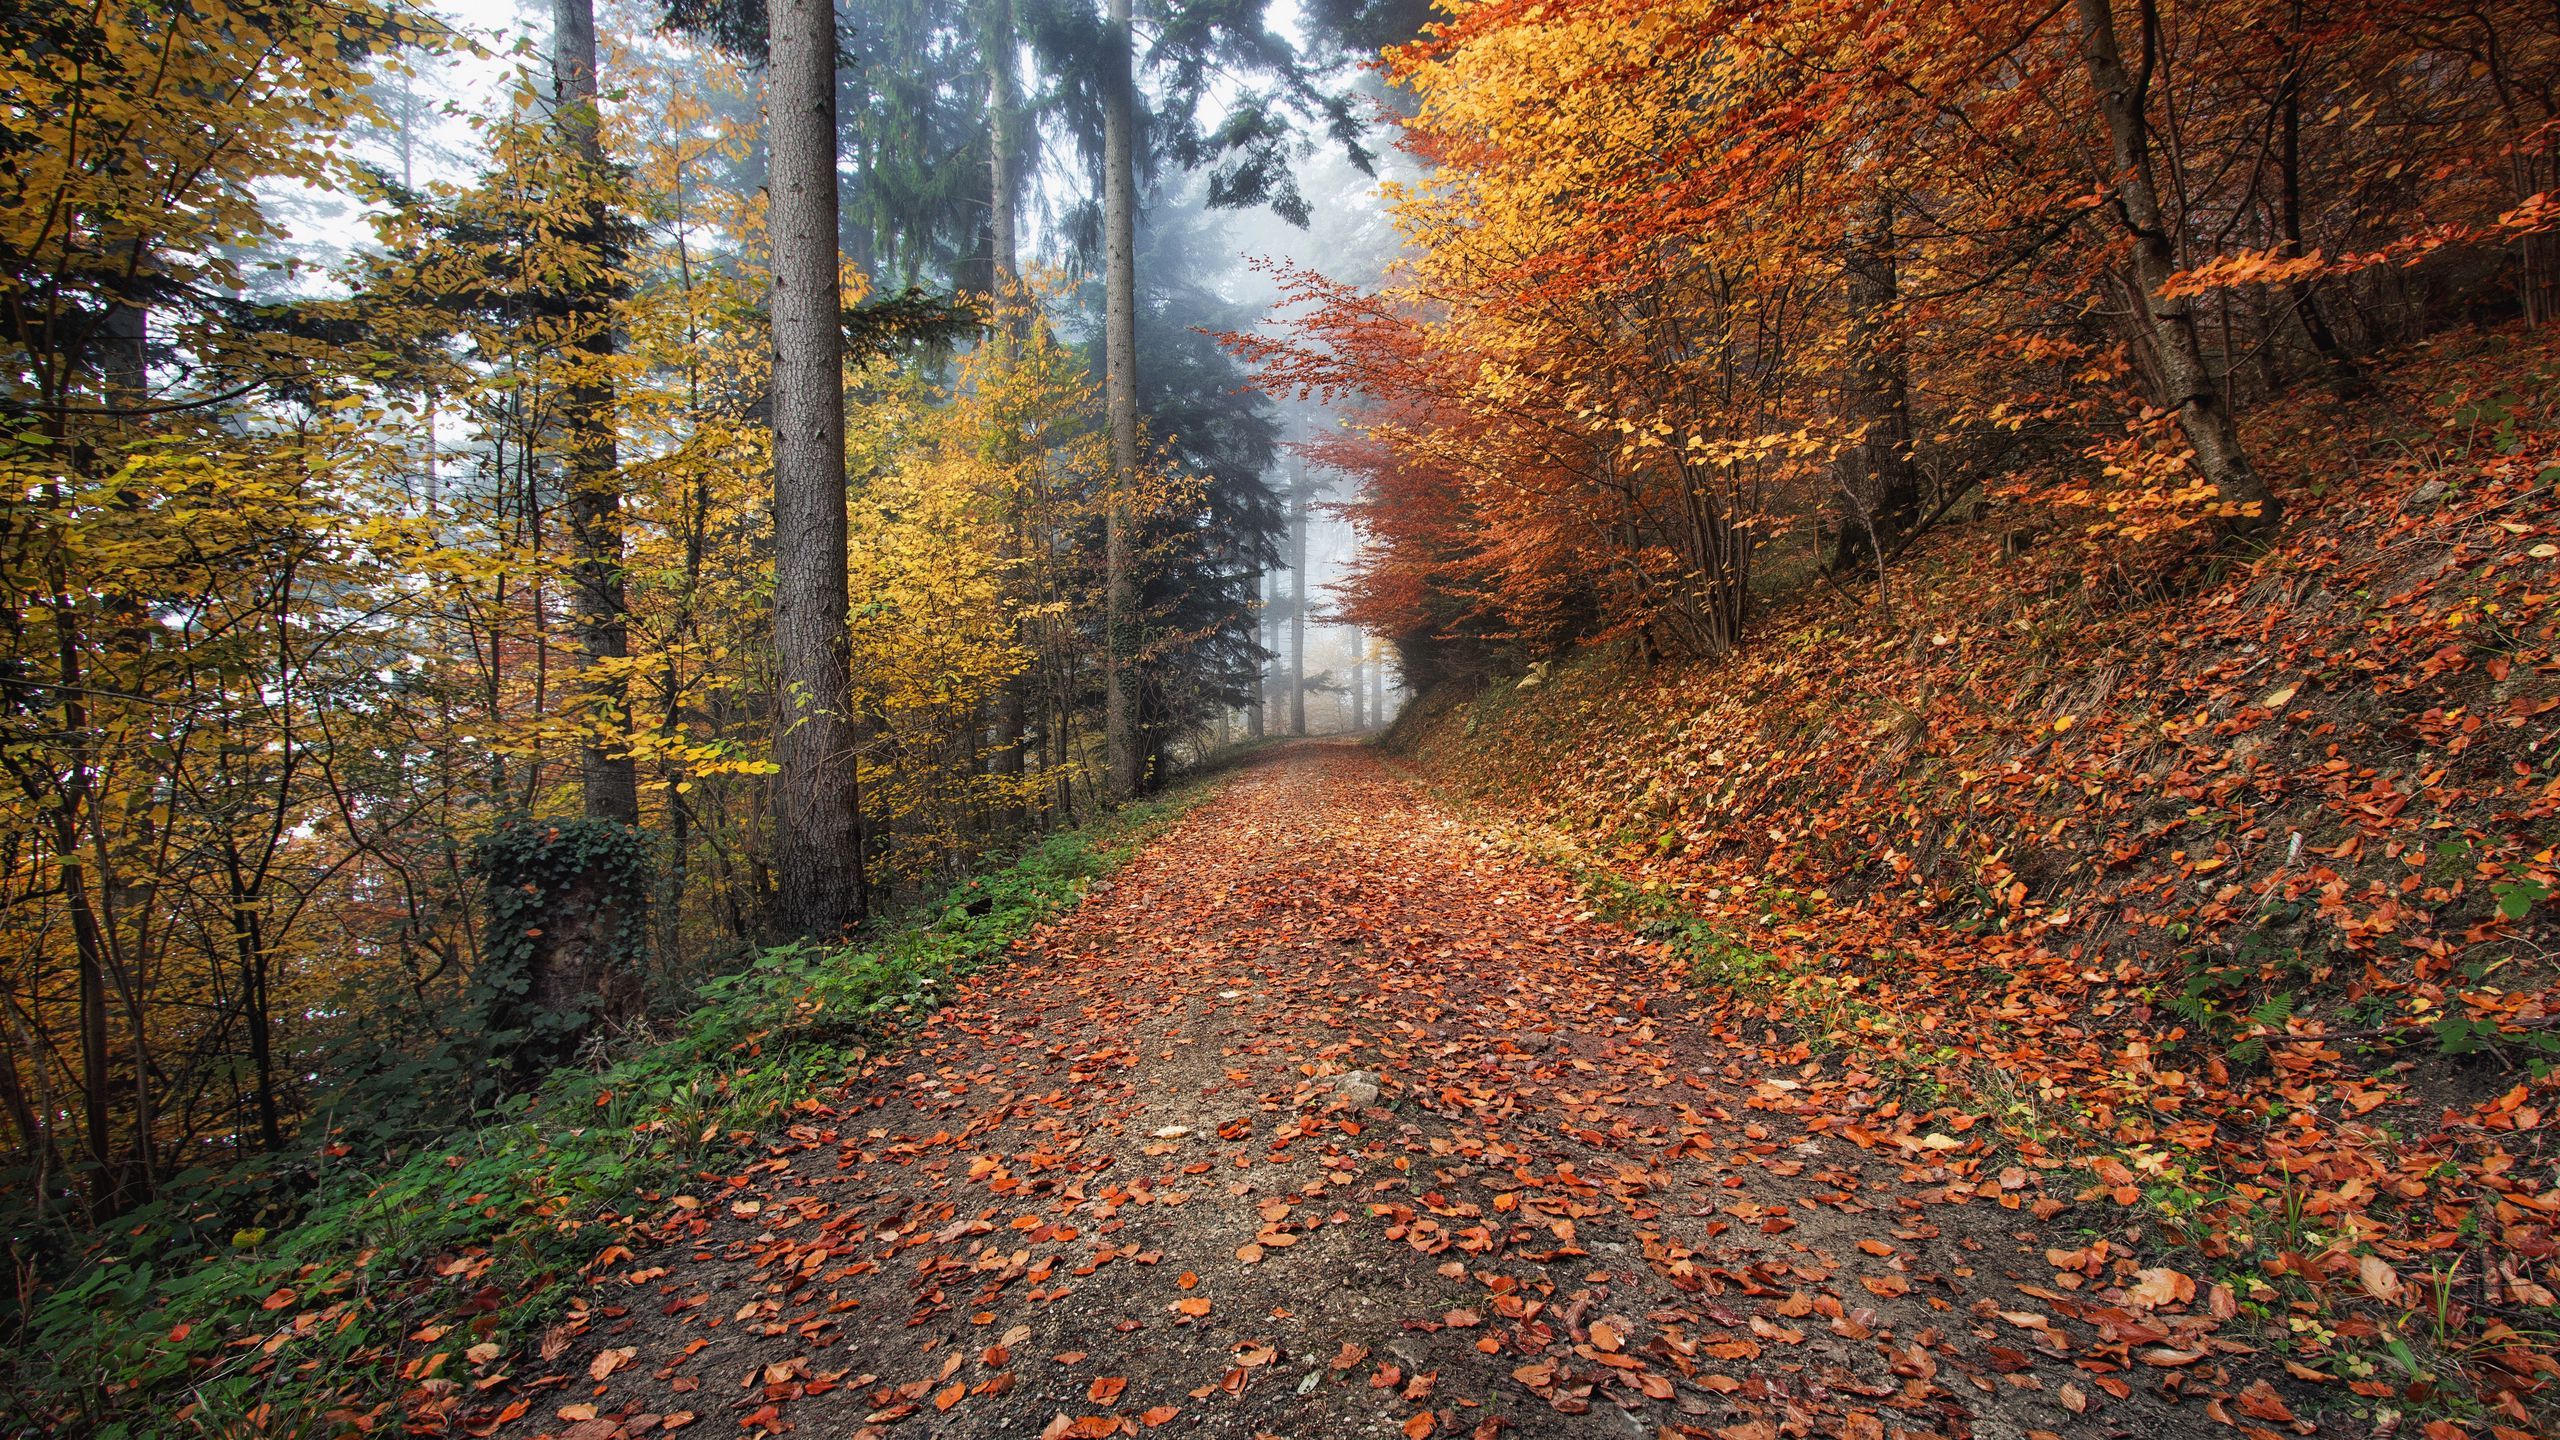 Download wallpaper 2560x1440 autumn, path, foliage widescreen 16:9 HD background